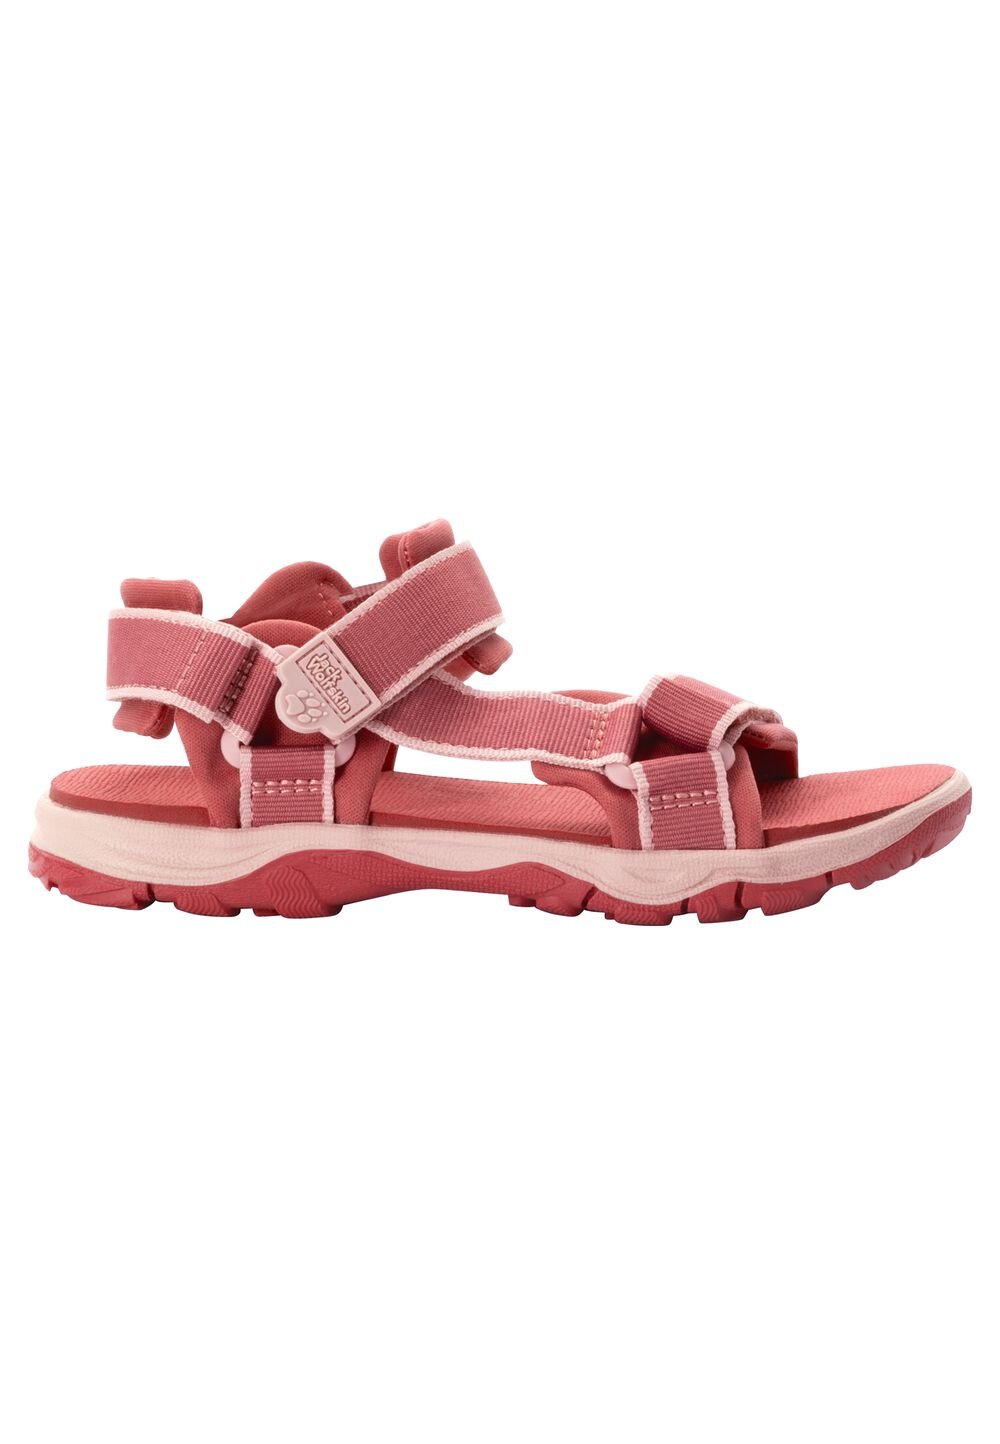 Jack Wolfskin Seven Seas 3 Kids Kinderen sandalen 28 soft pink soft pink